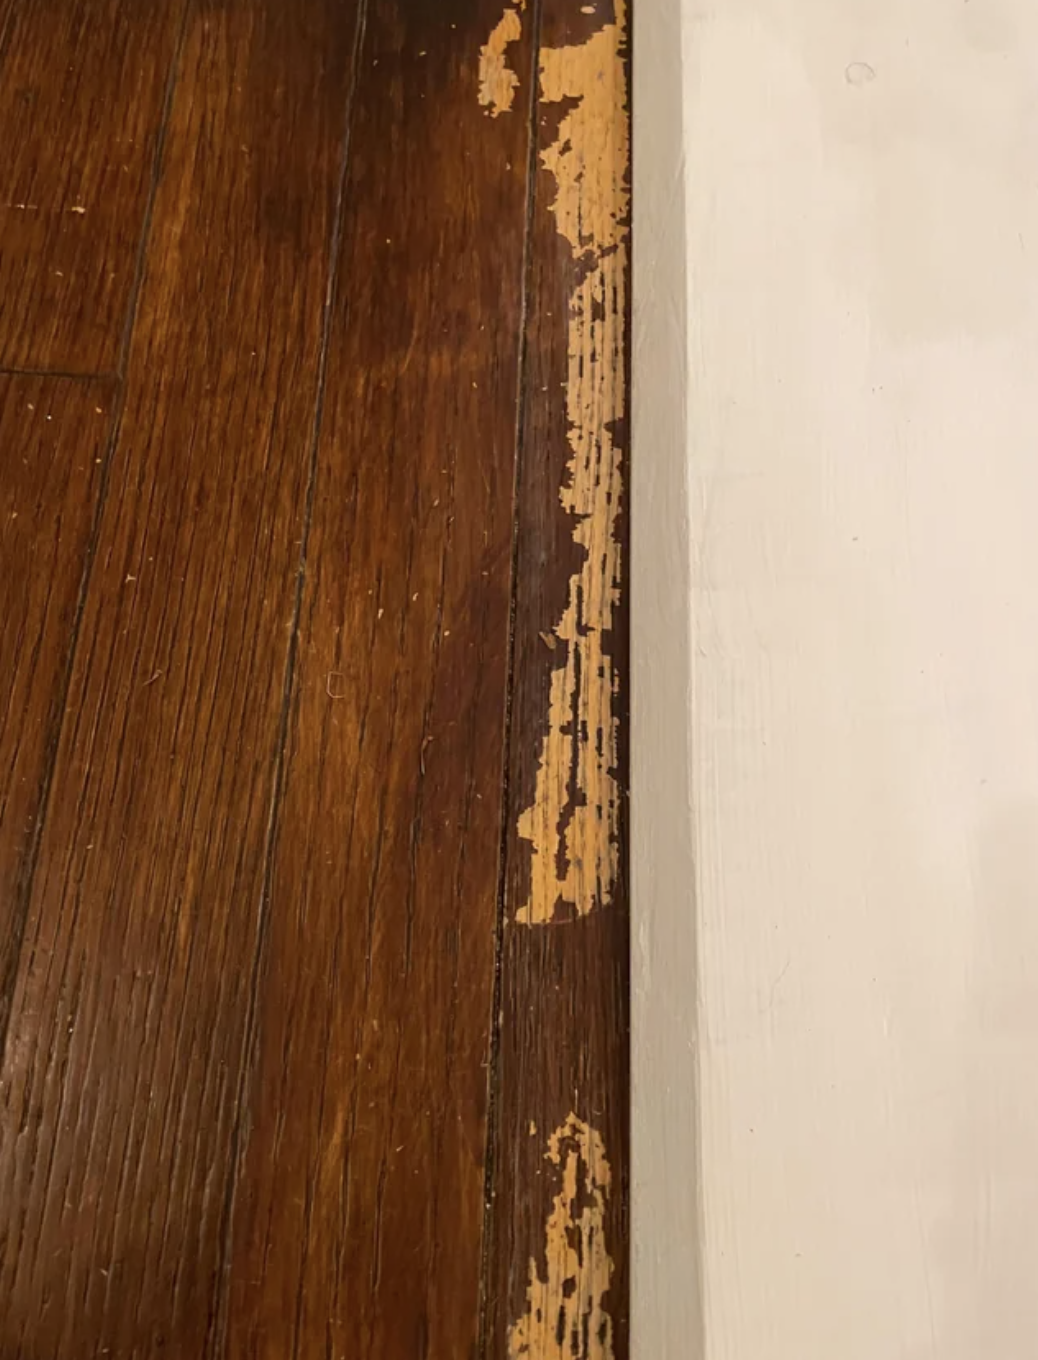 Hardwood floor is chipped